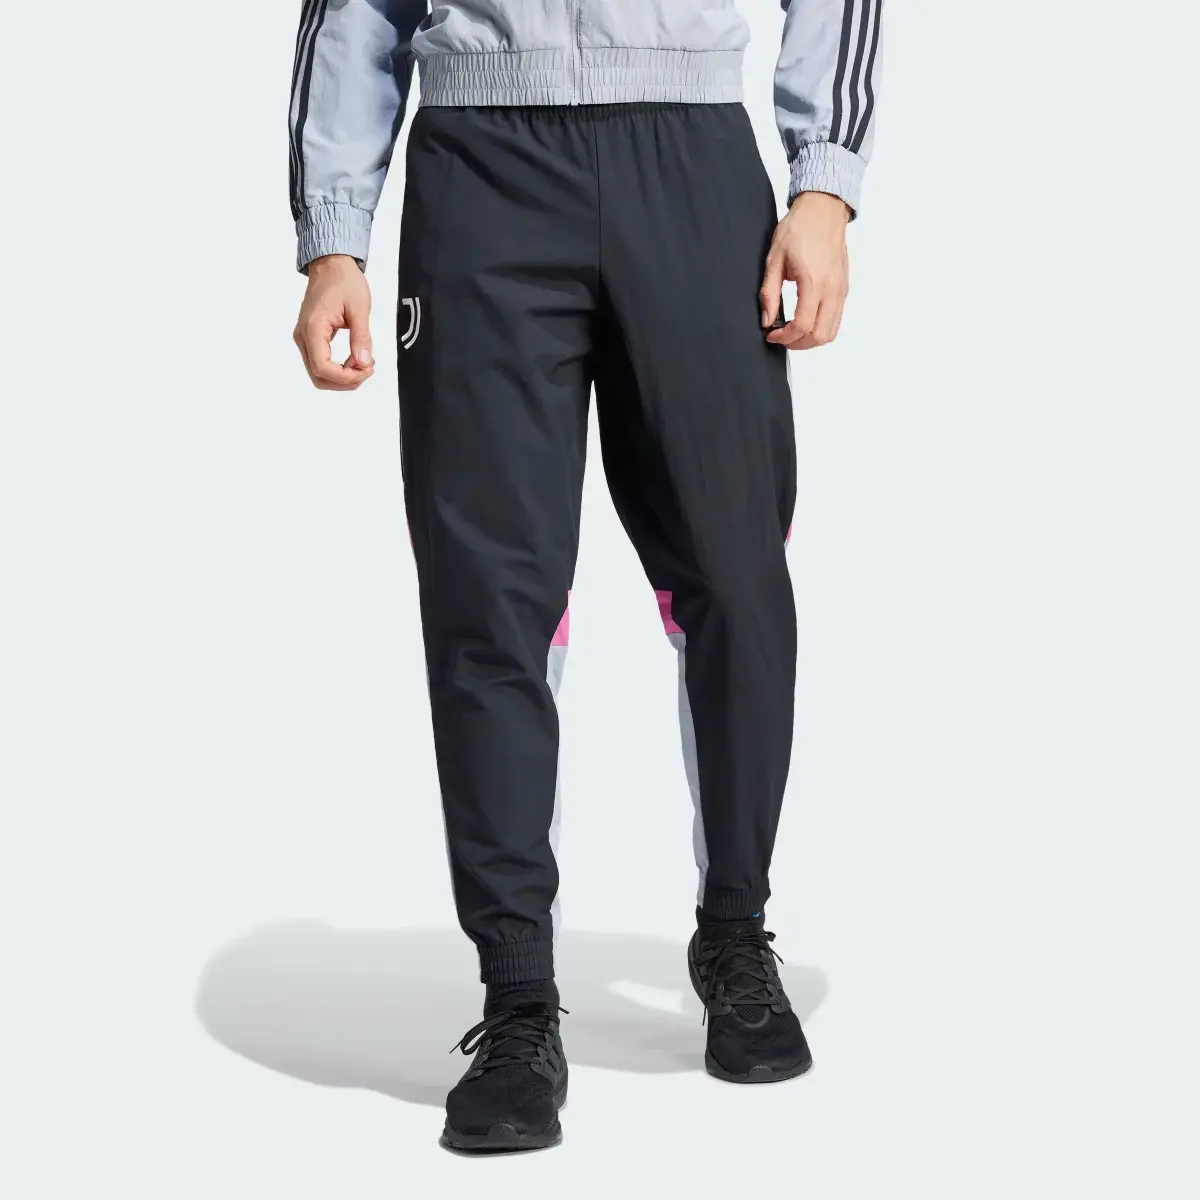 Adidas Juventus Woven Track Pants. 2